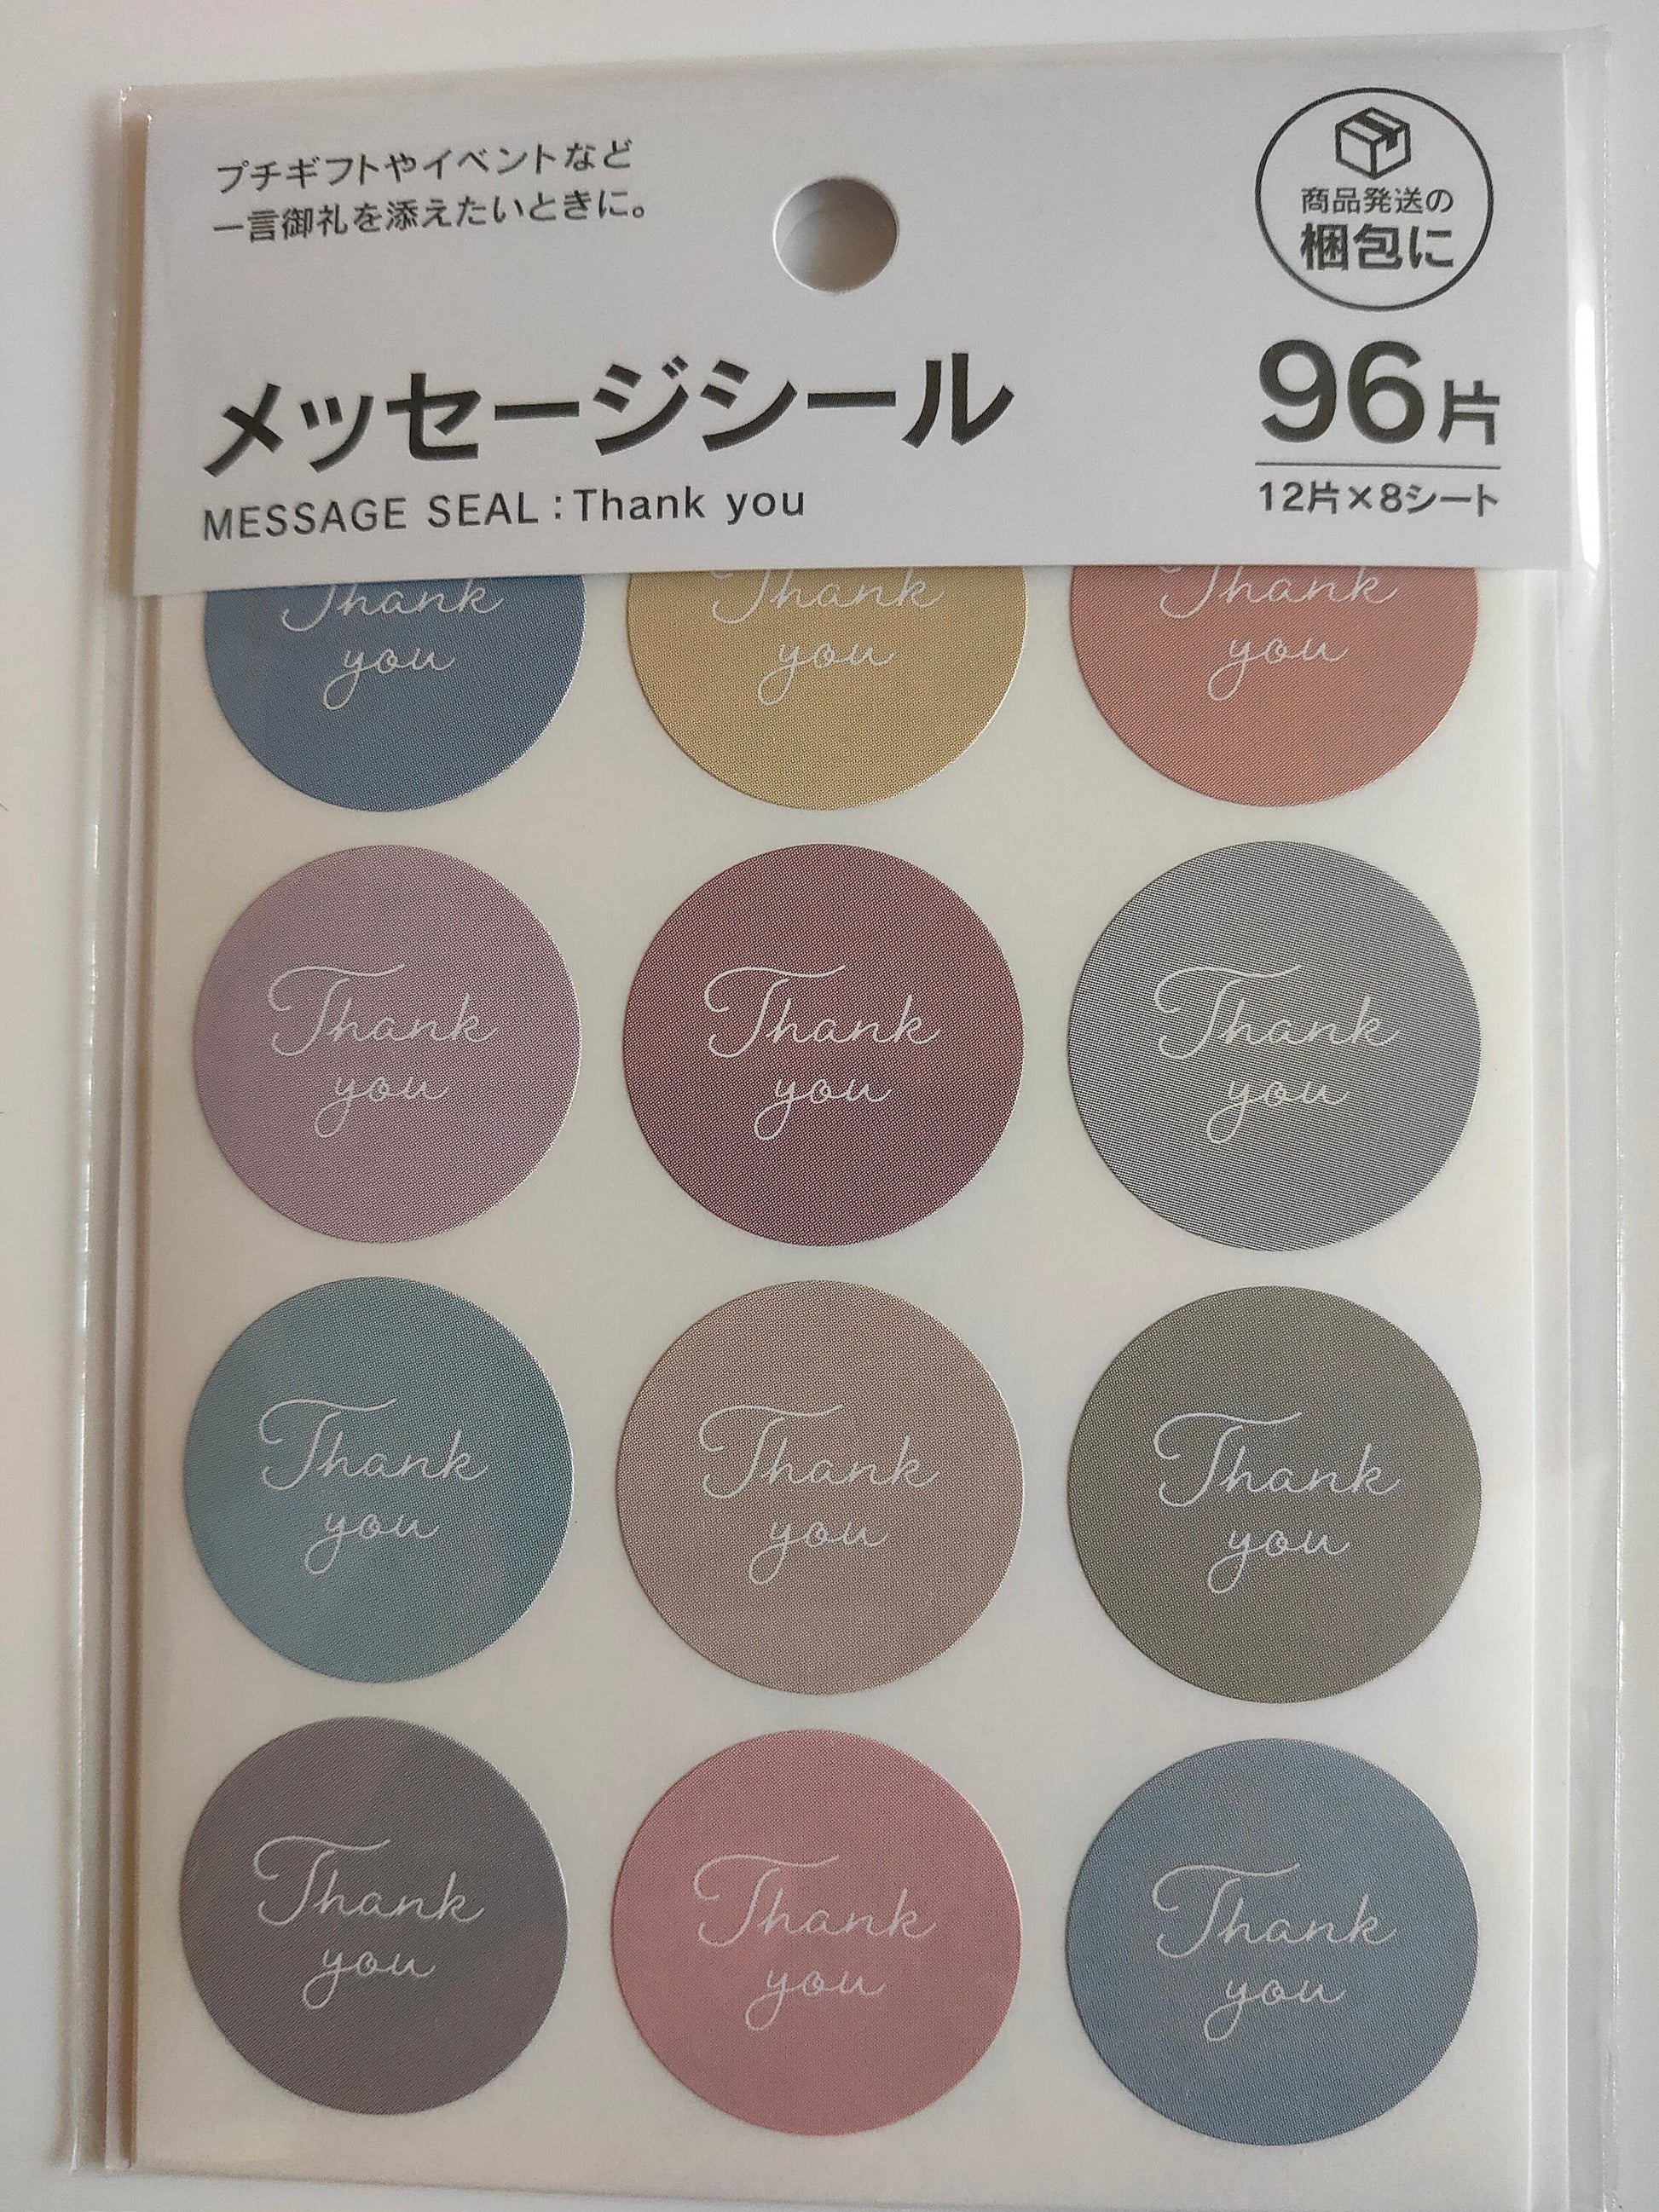 Thank you Colorful Stickers 96 piece,Kyowa_Round 96p /Terrazzo 96p /Multi 96p